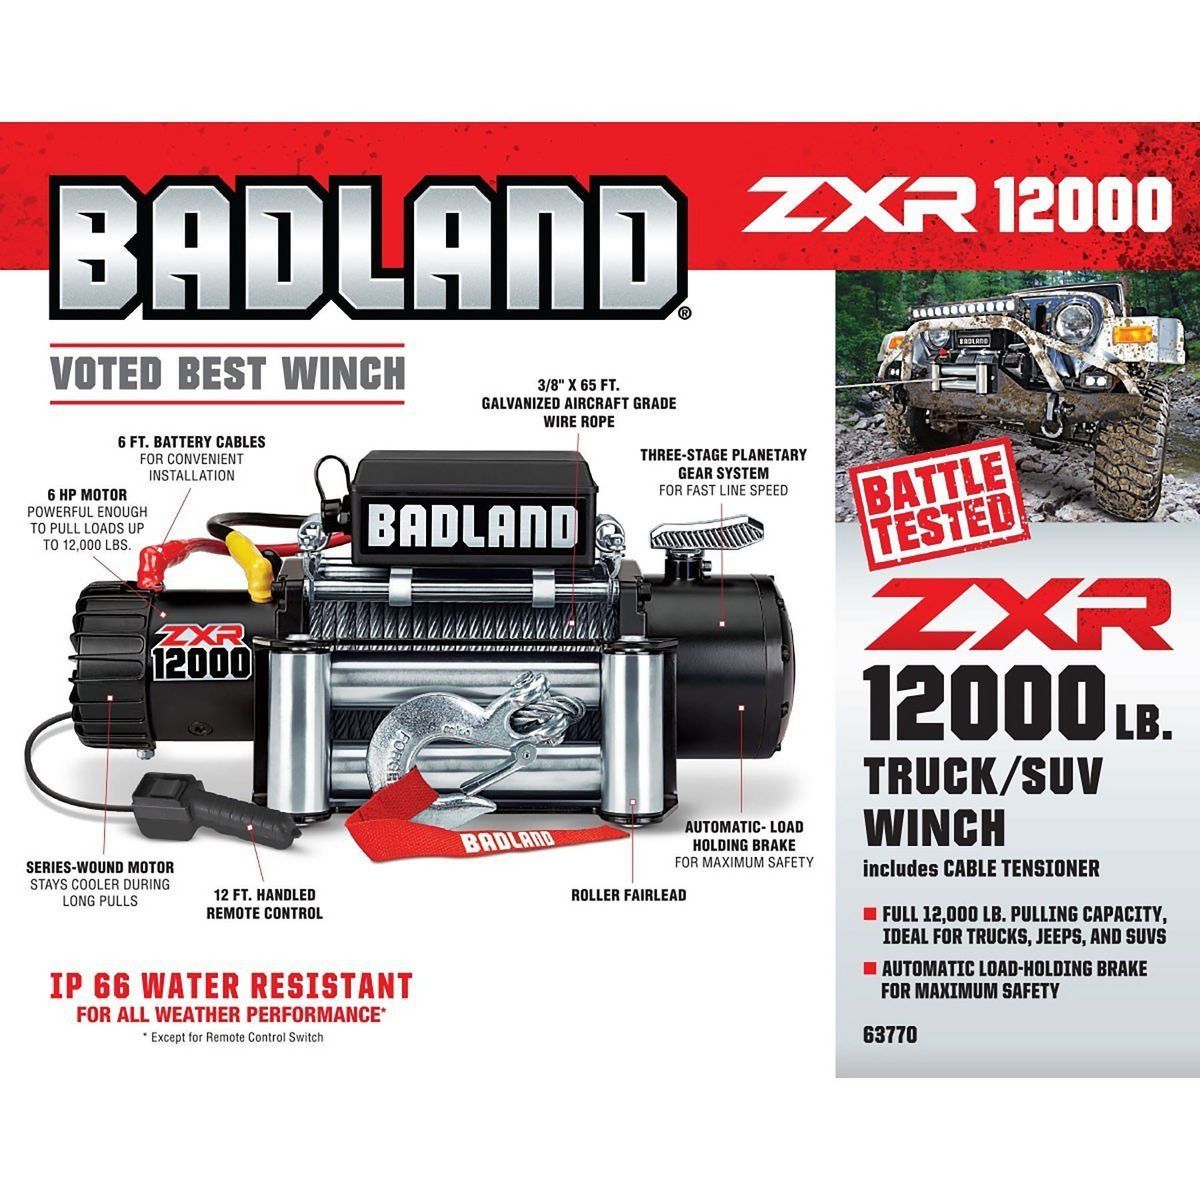 Badland winch 12000 lbs